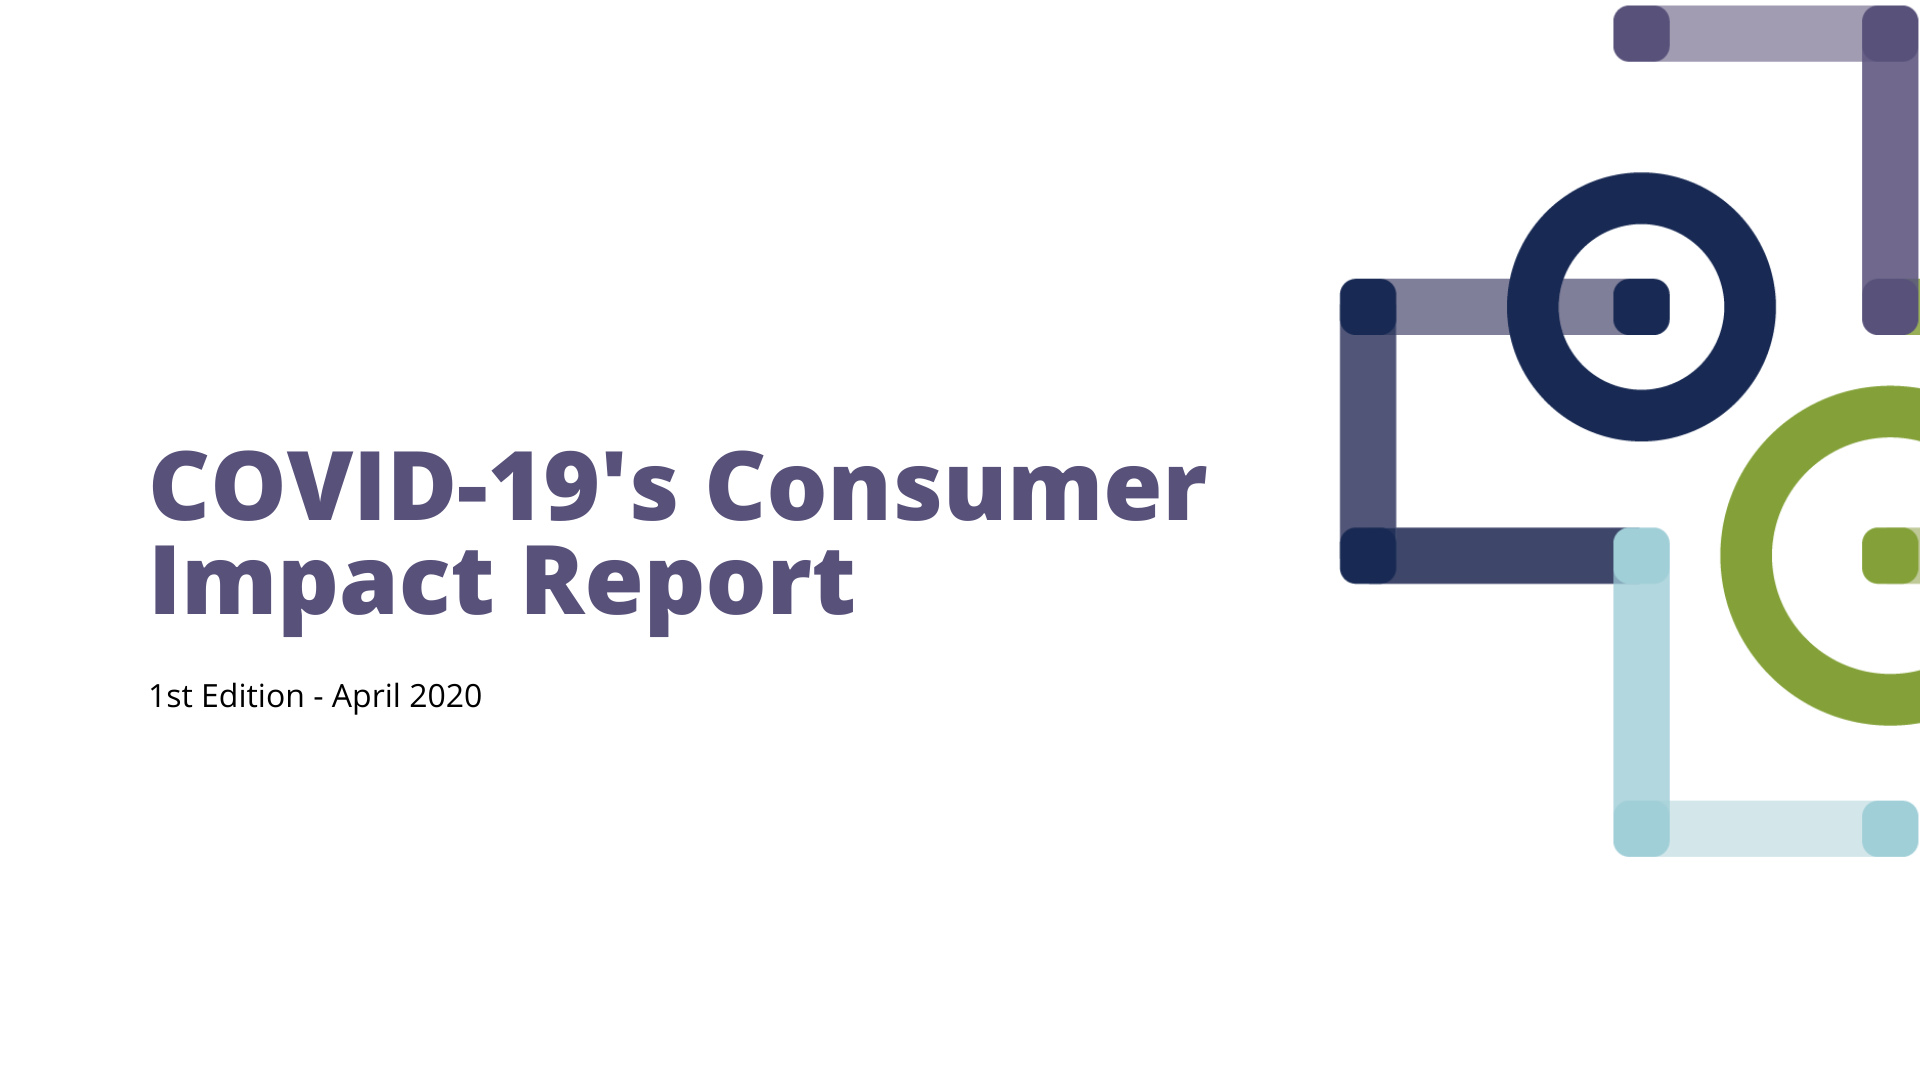 Covid-19 Consumer Impact Report